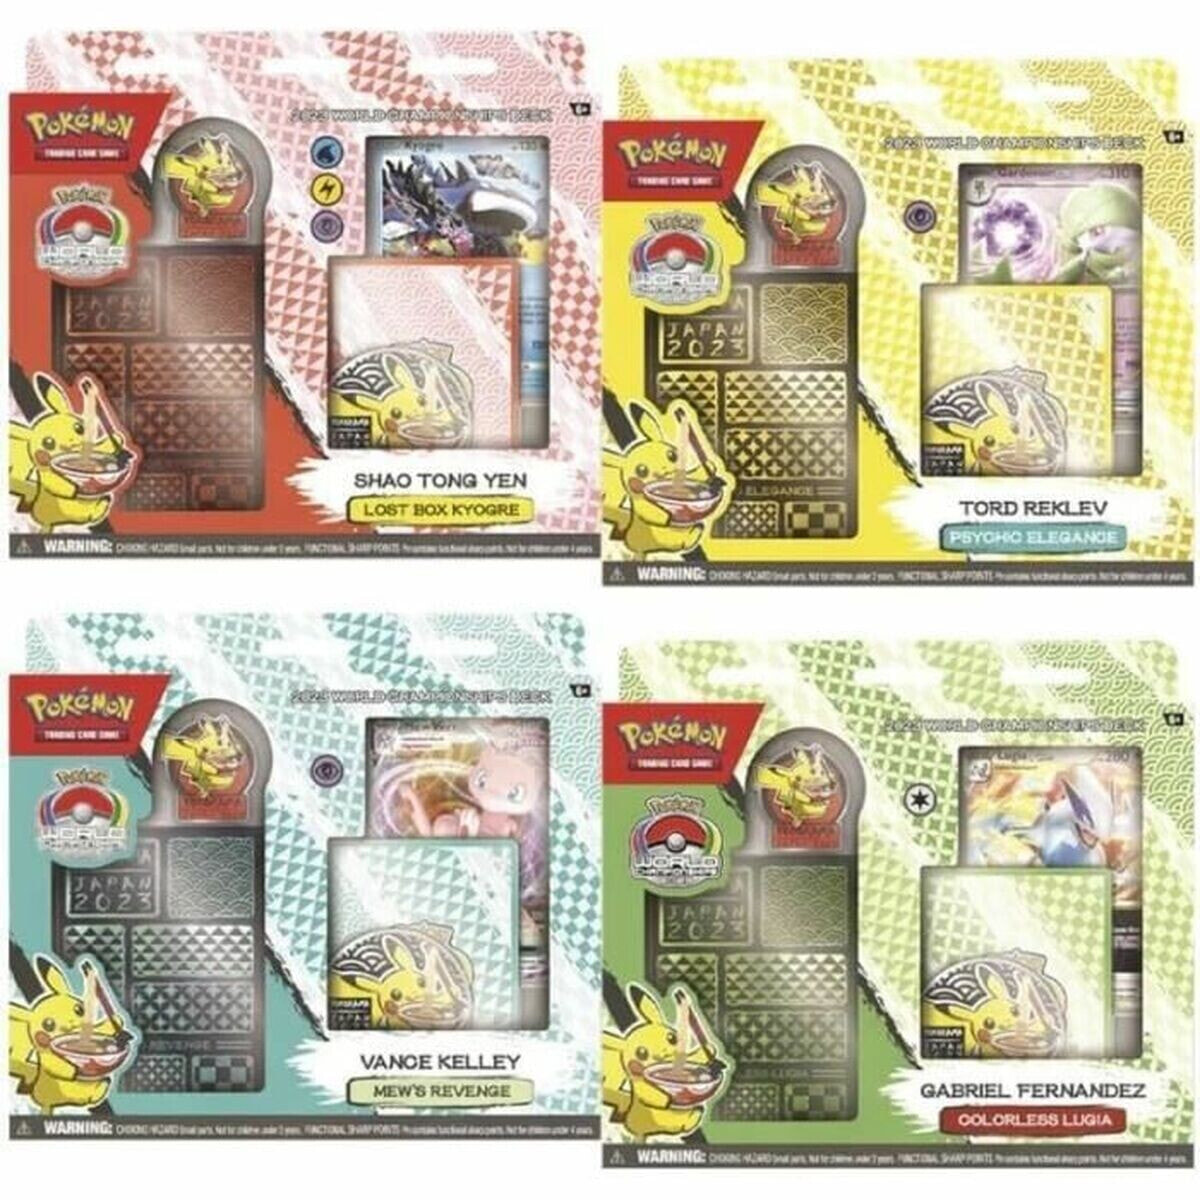 Pack of stickers Pokémon Pokemon